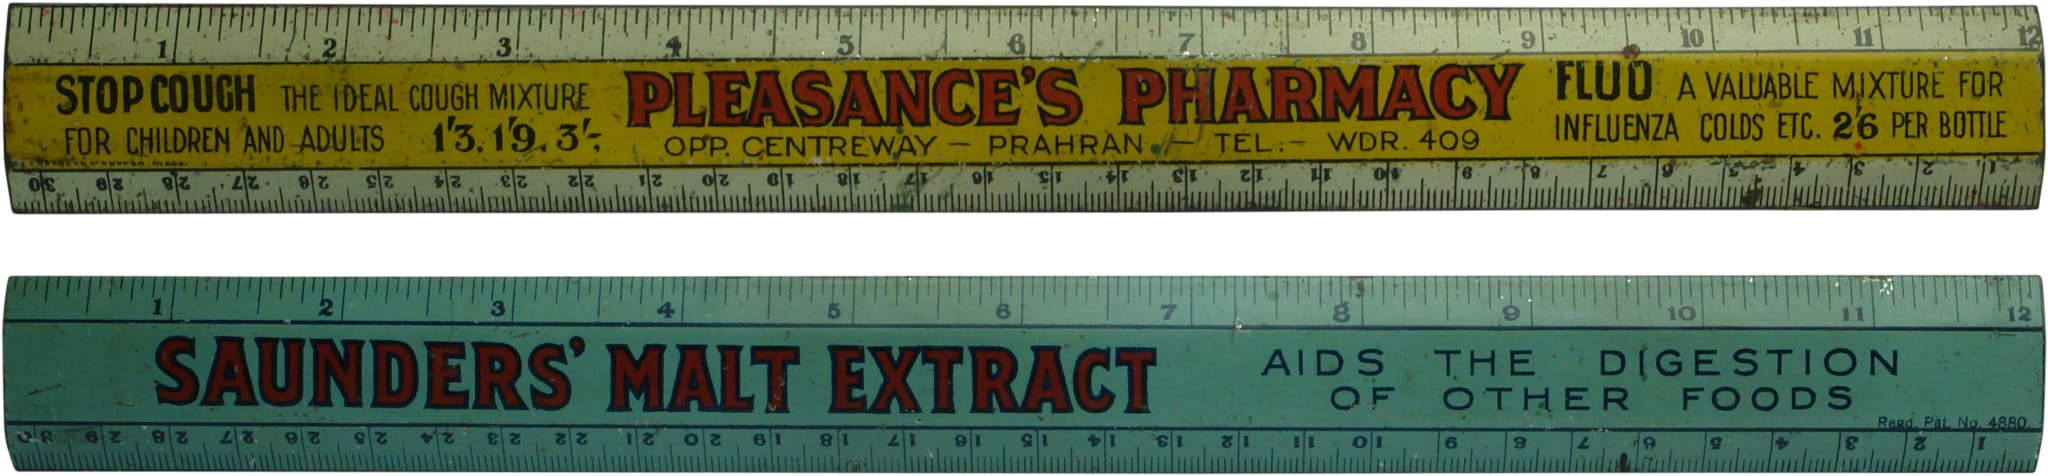 Advertising Rulers Pleasance's Pharmacy Prahran Saunders Malt Extract